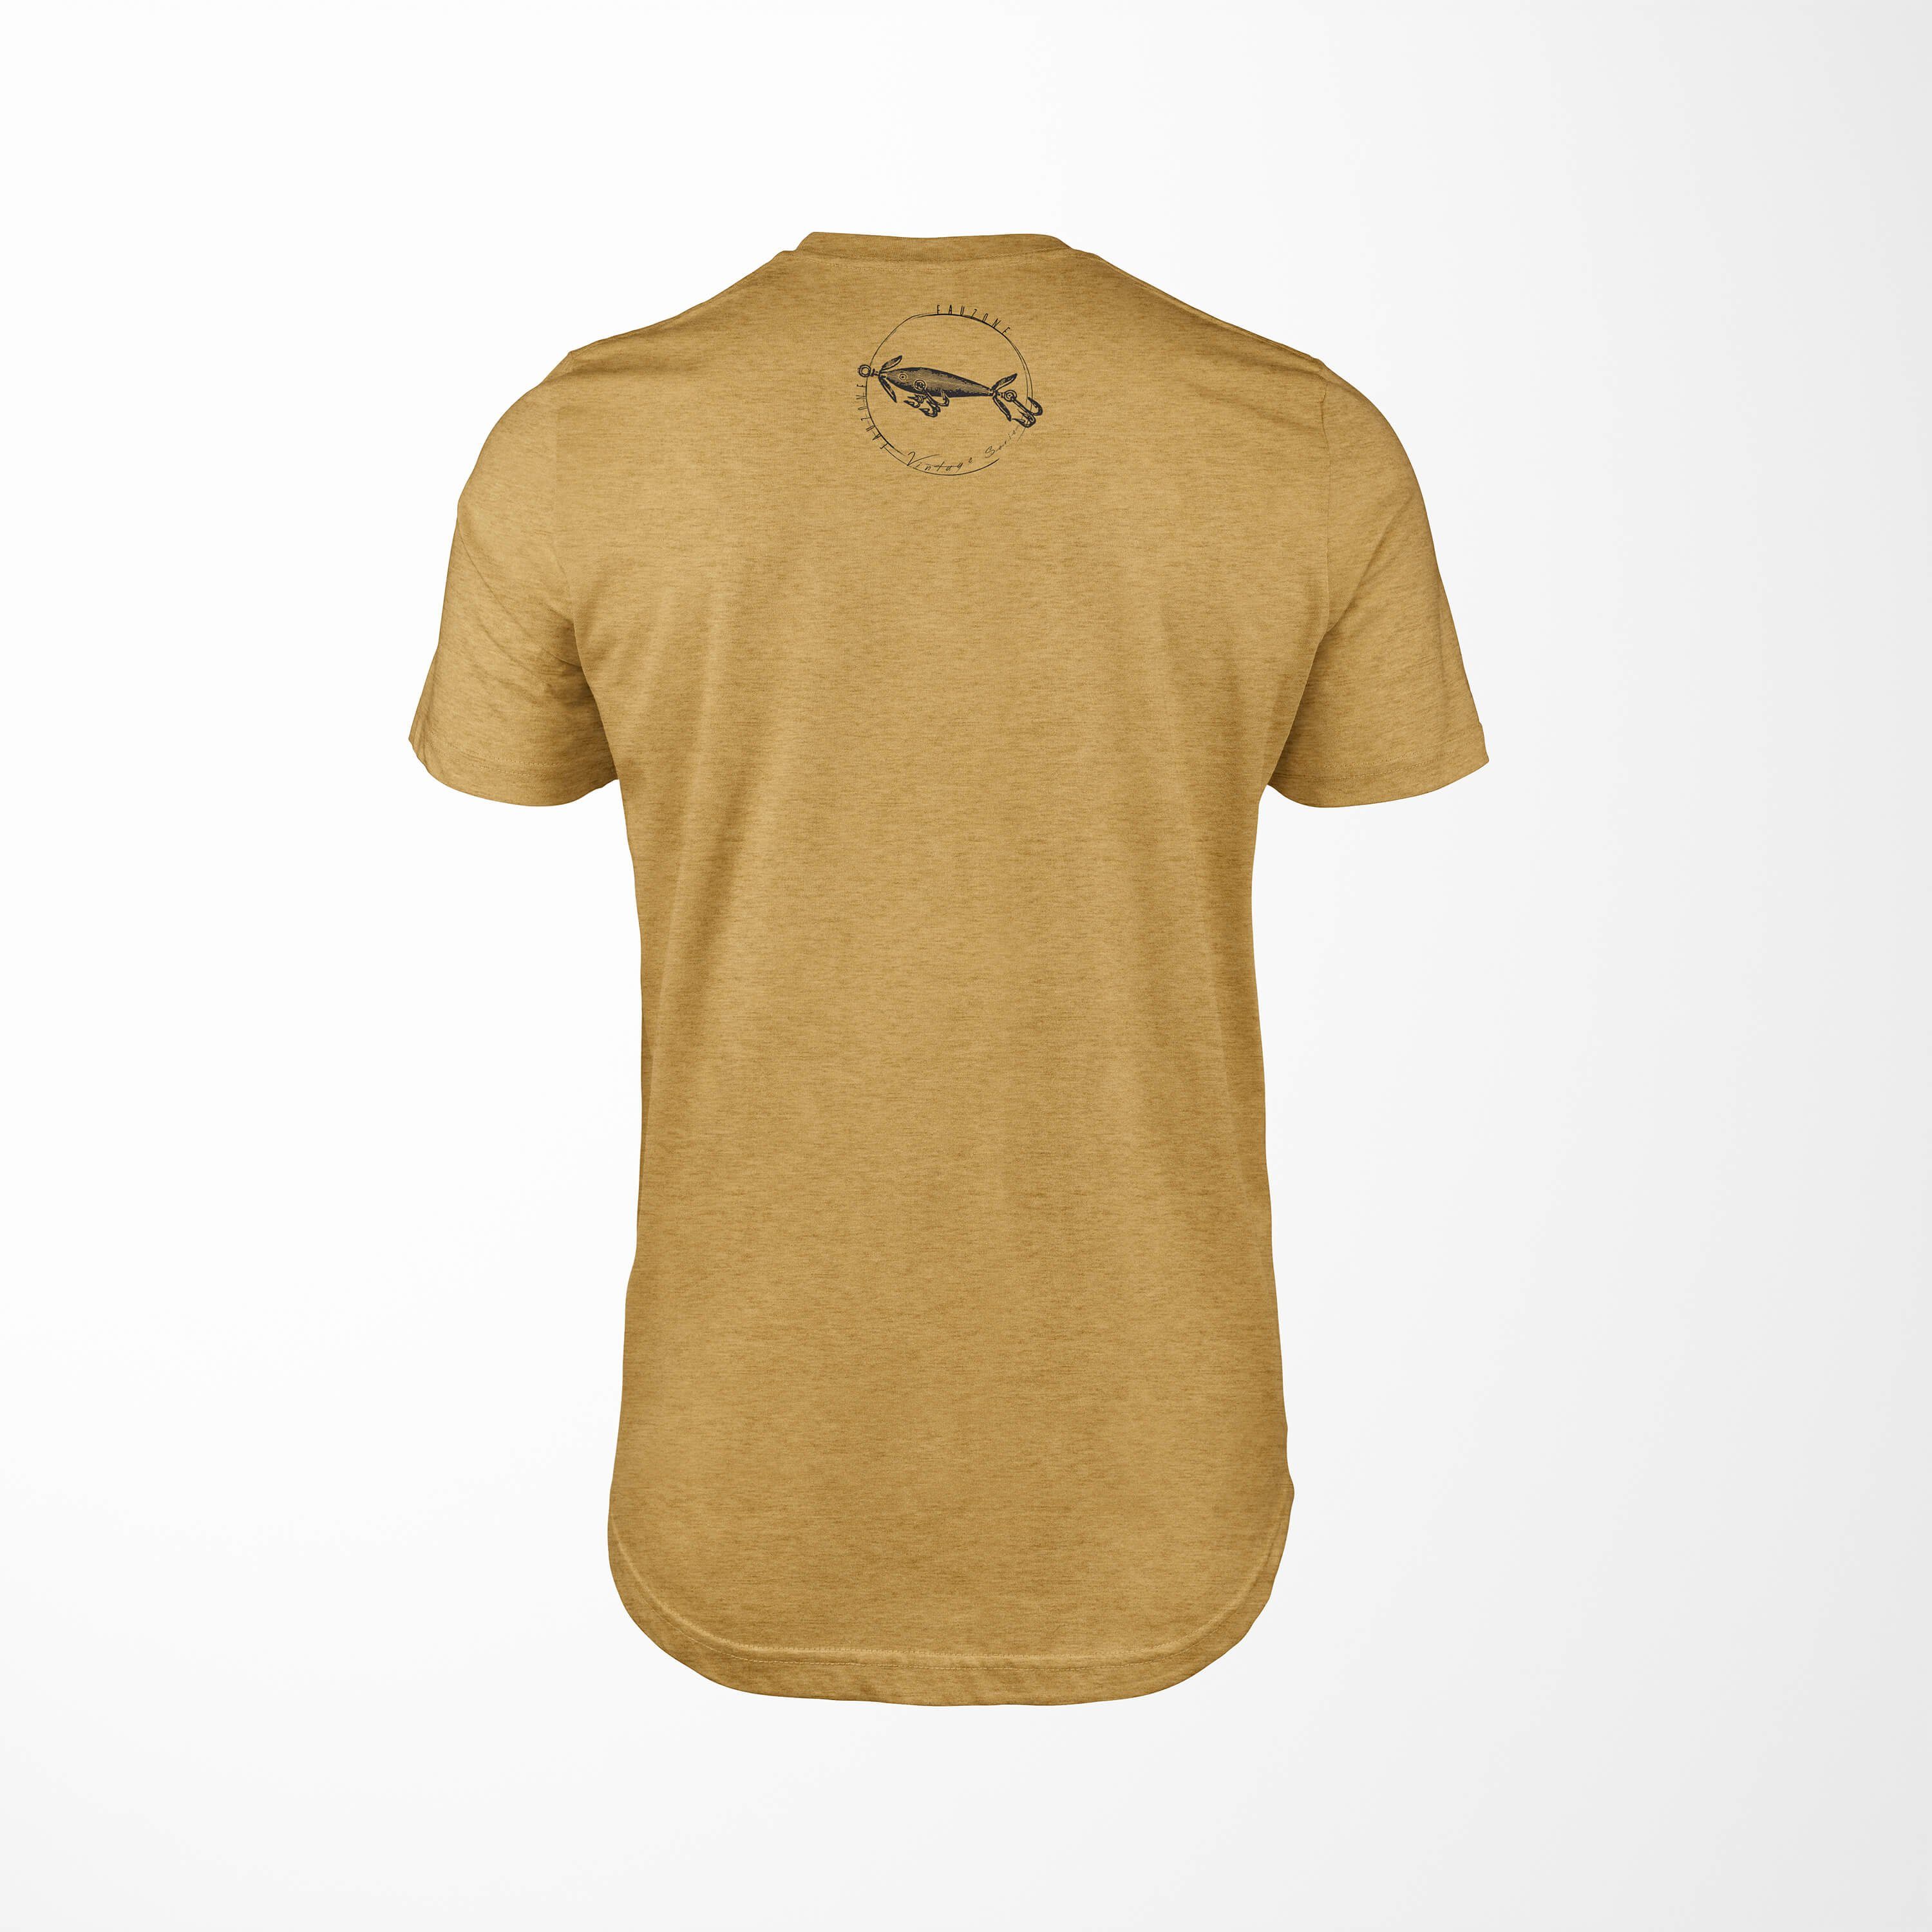 Art Herren Antique T-Shirt Gold Sinus Vintage T-Shirt Fischhaken